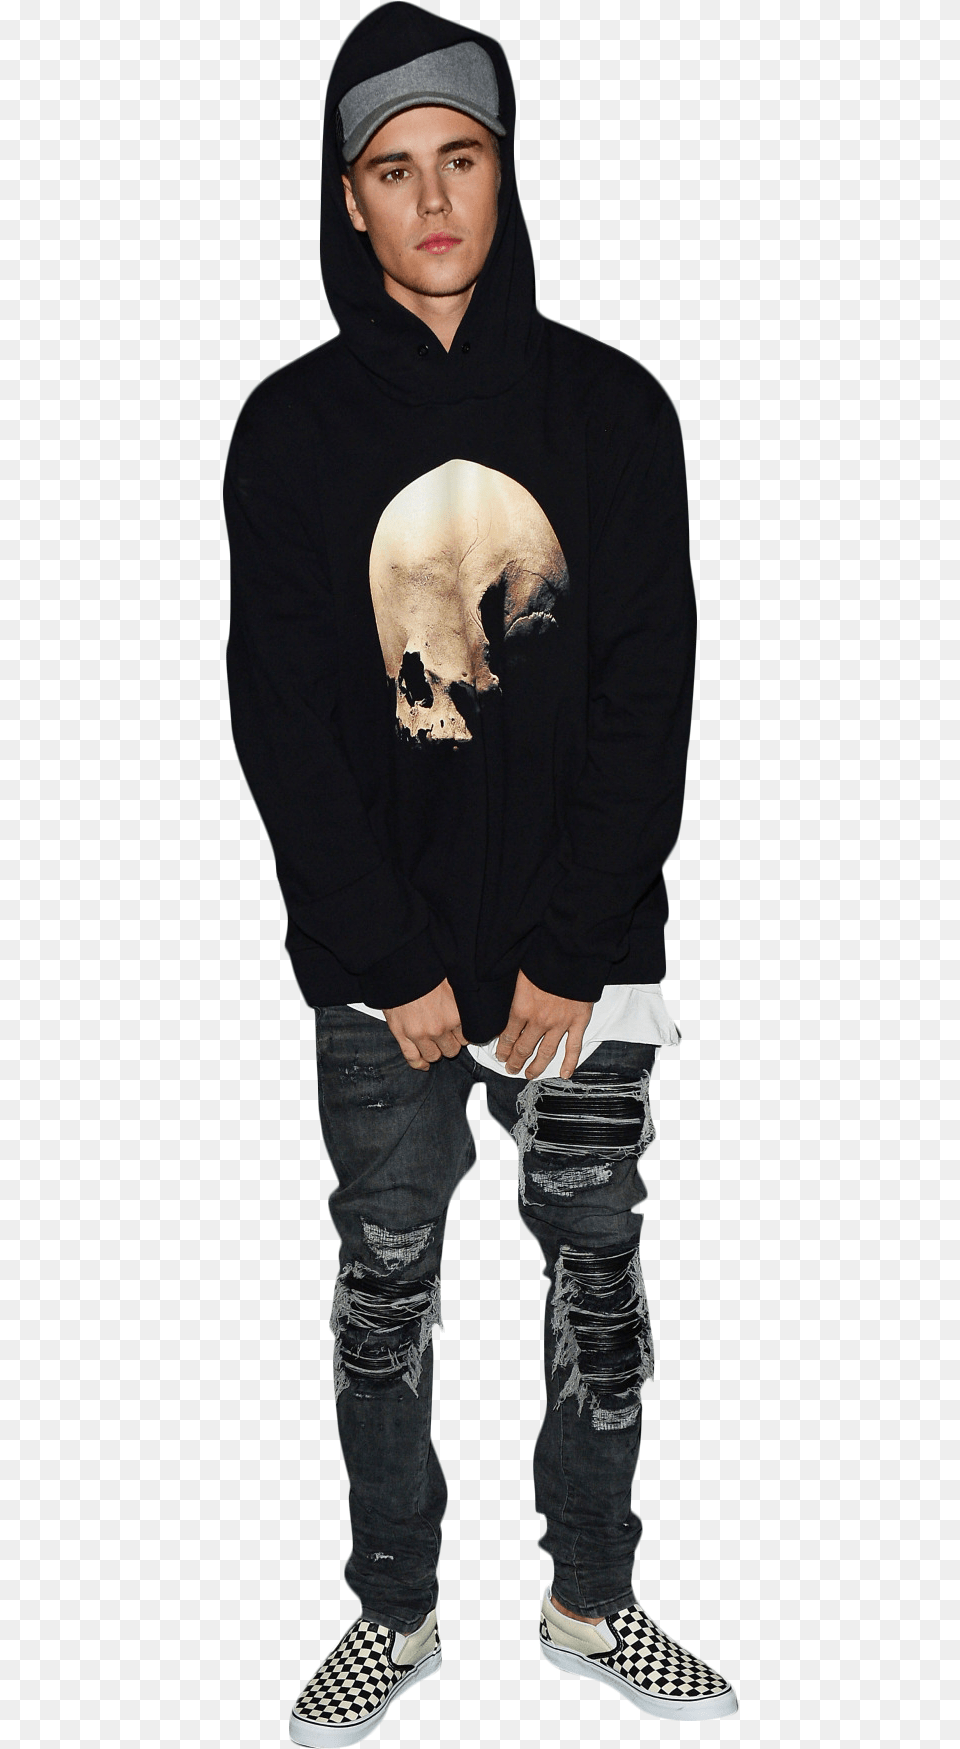 Justin Bieber Skull, Sweatshirt, Shoe, Knitwear, Pants Png Image